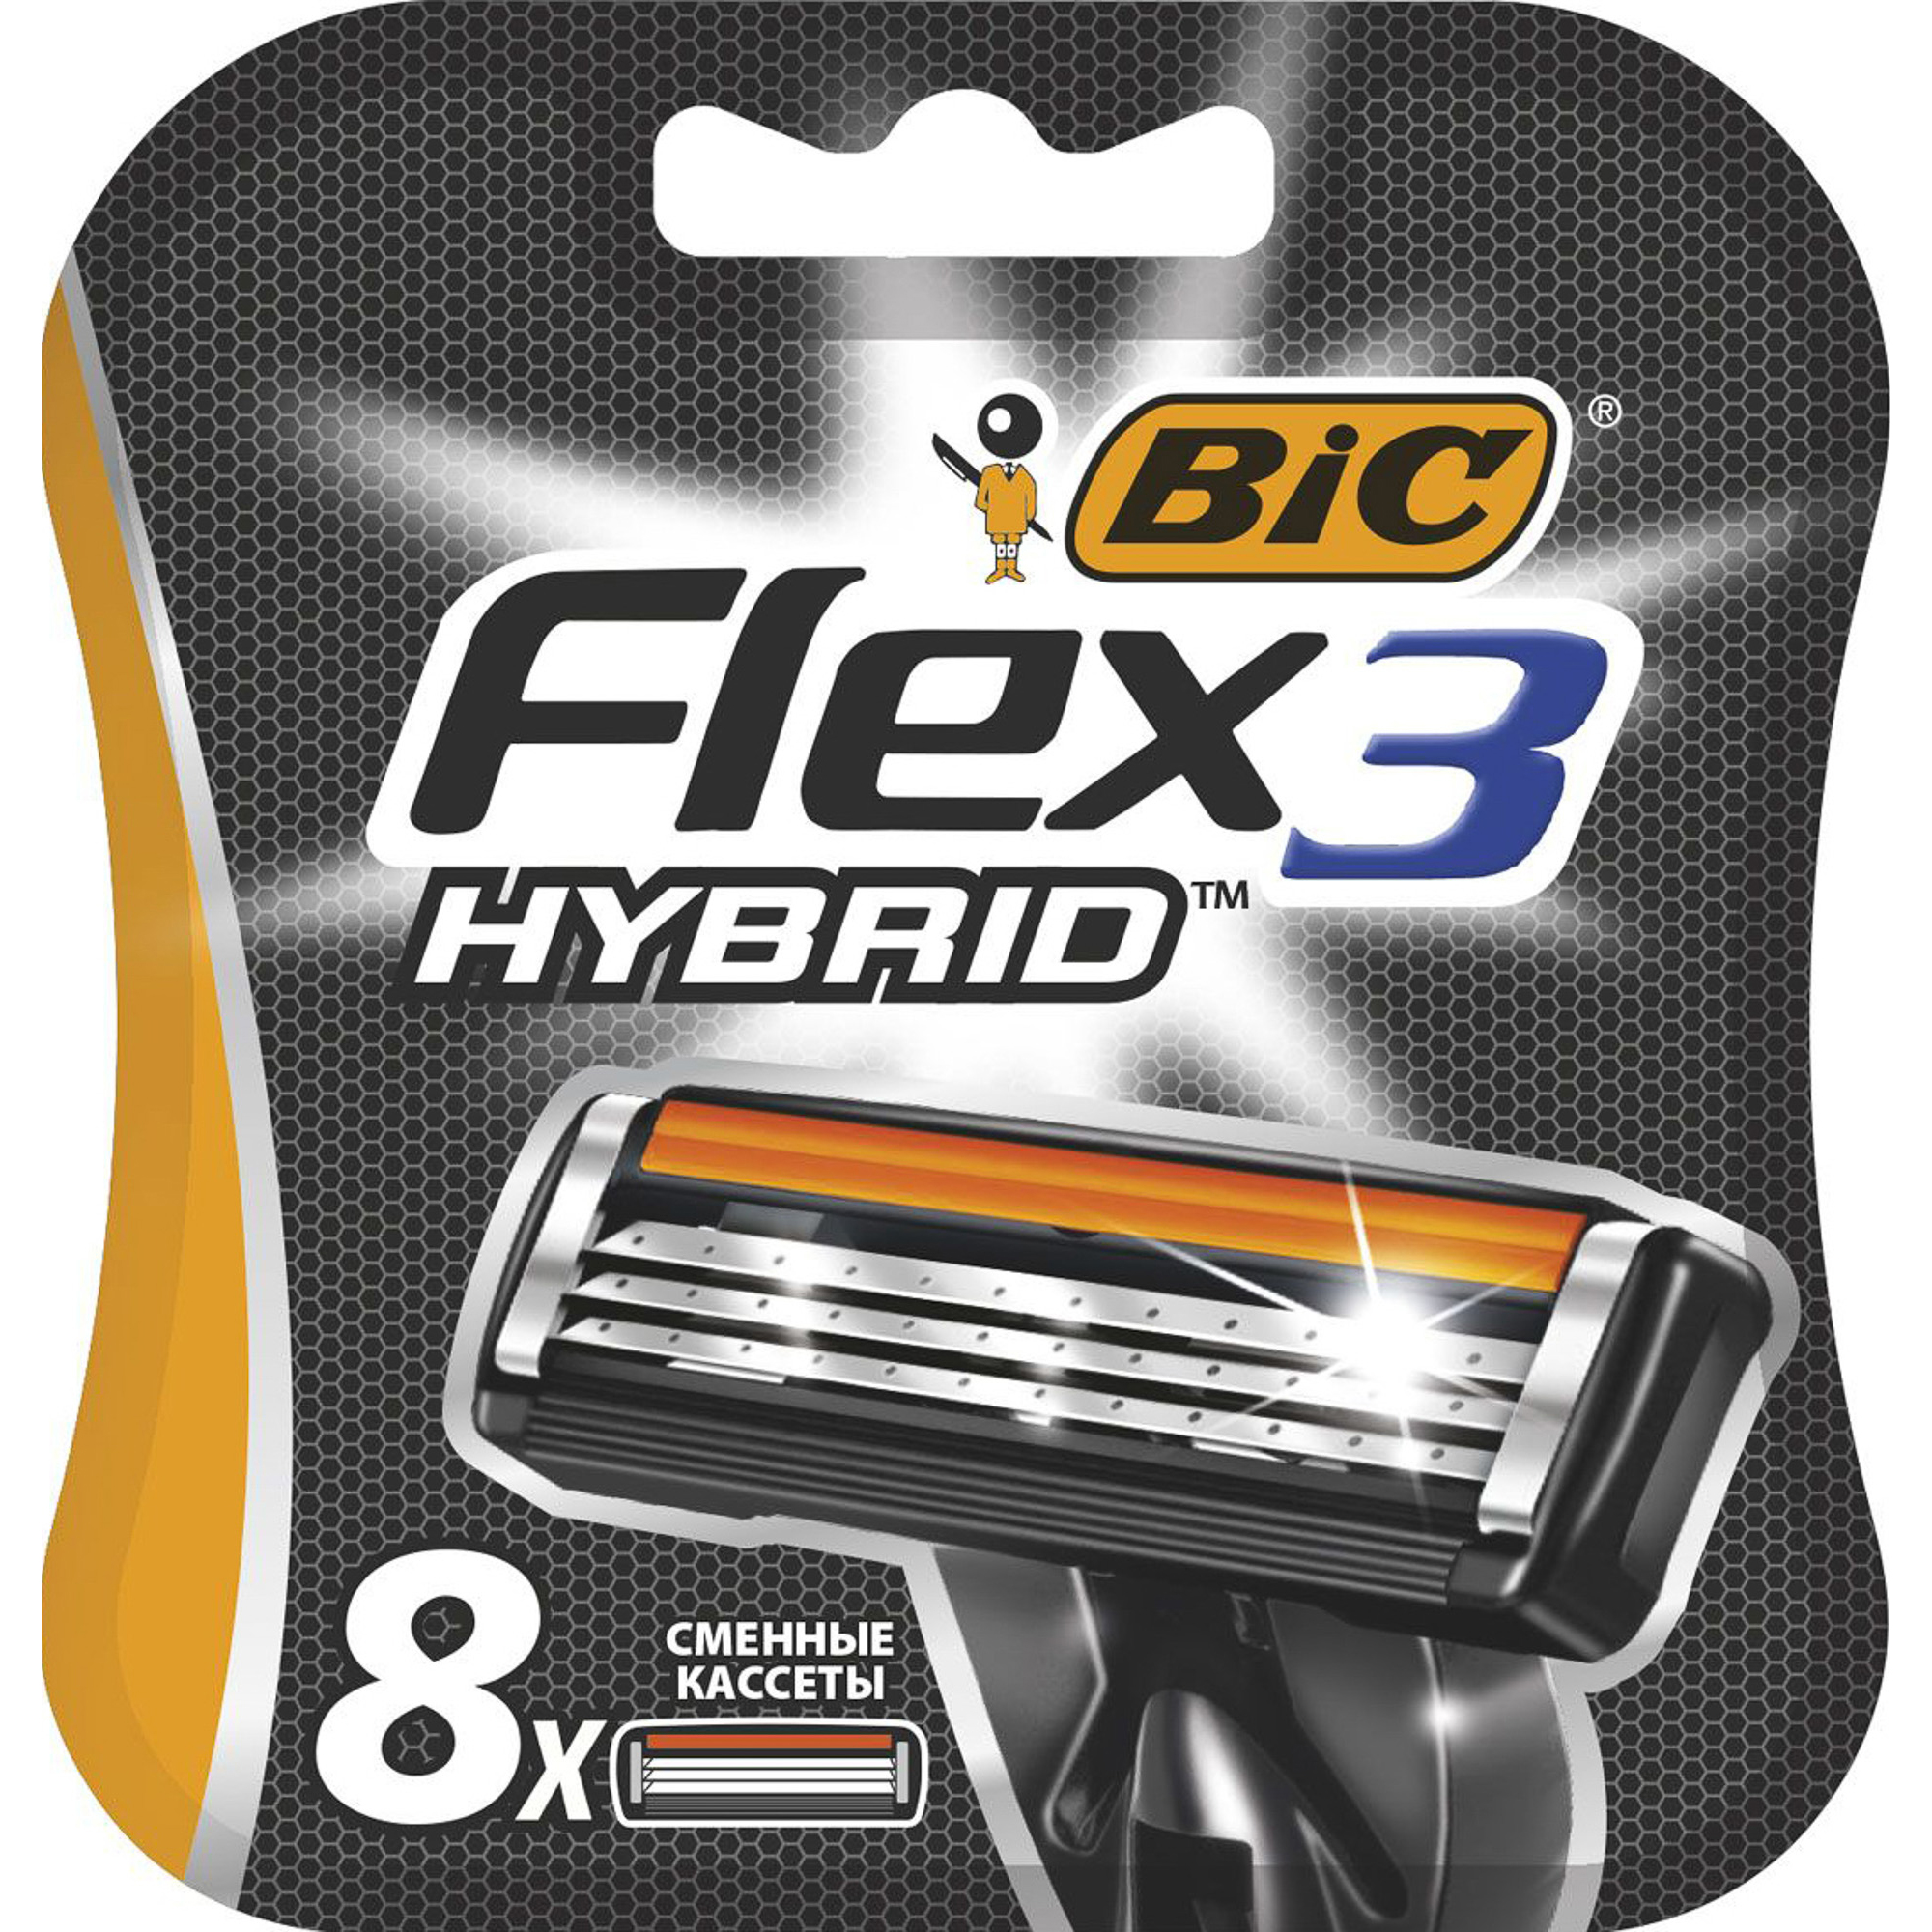    3  / Bic Flex 3 Hybrid -     8 